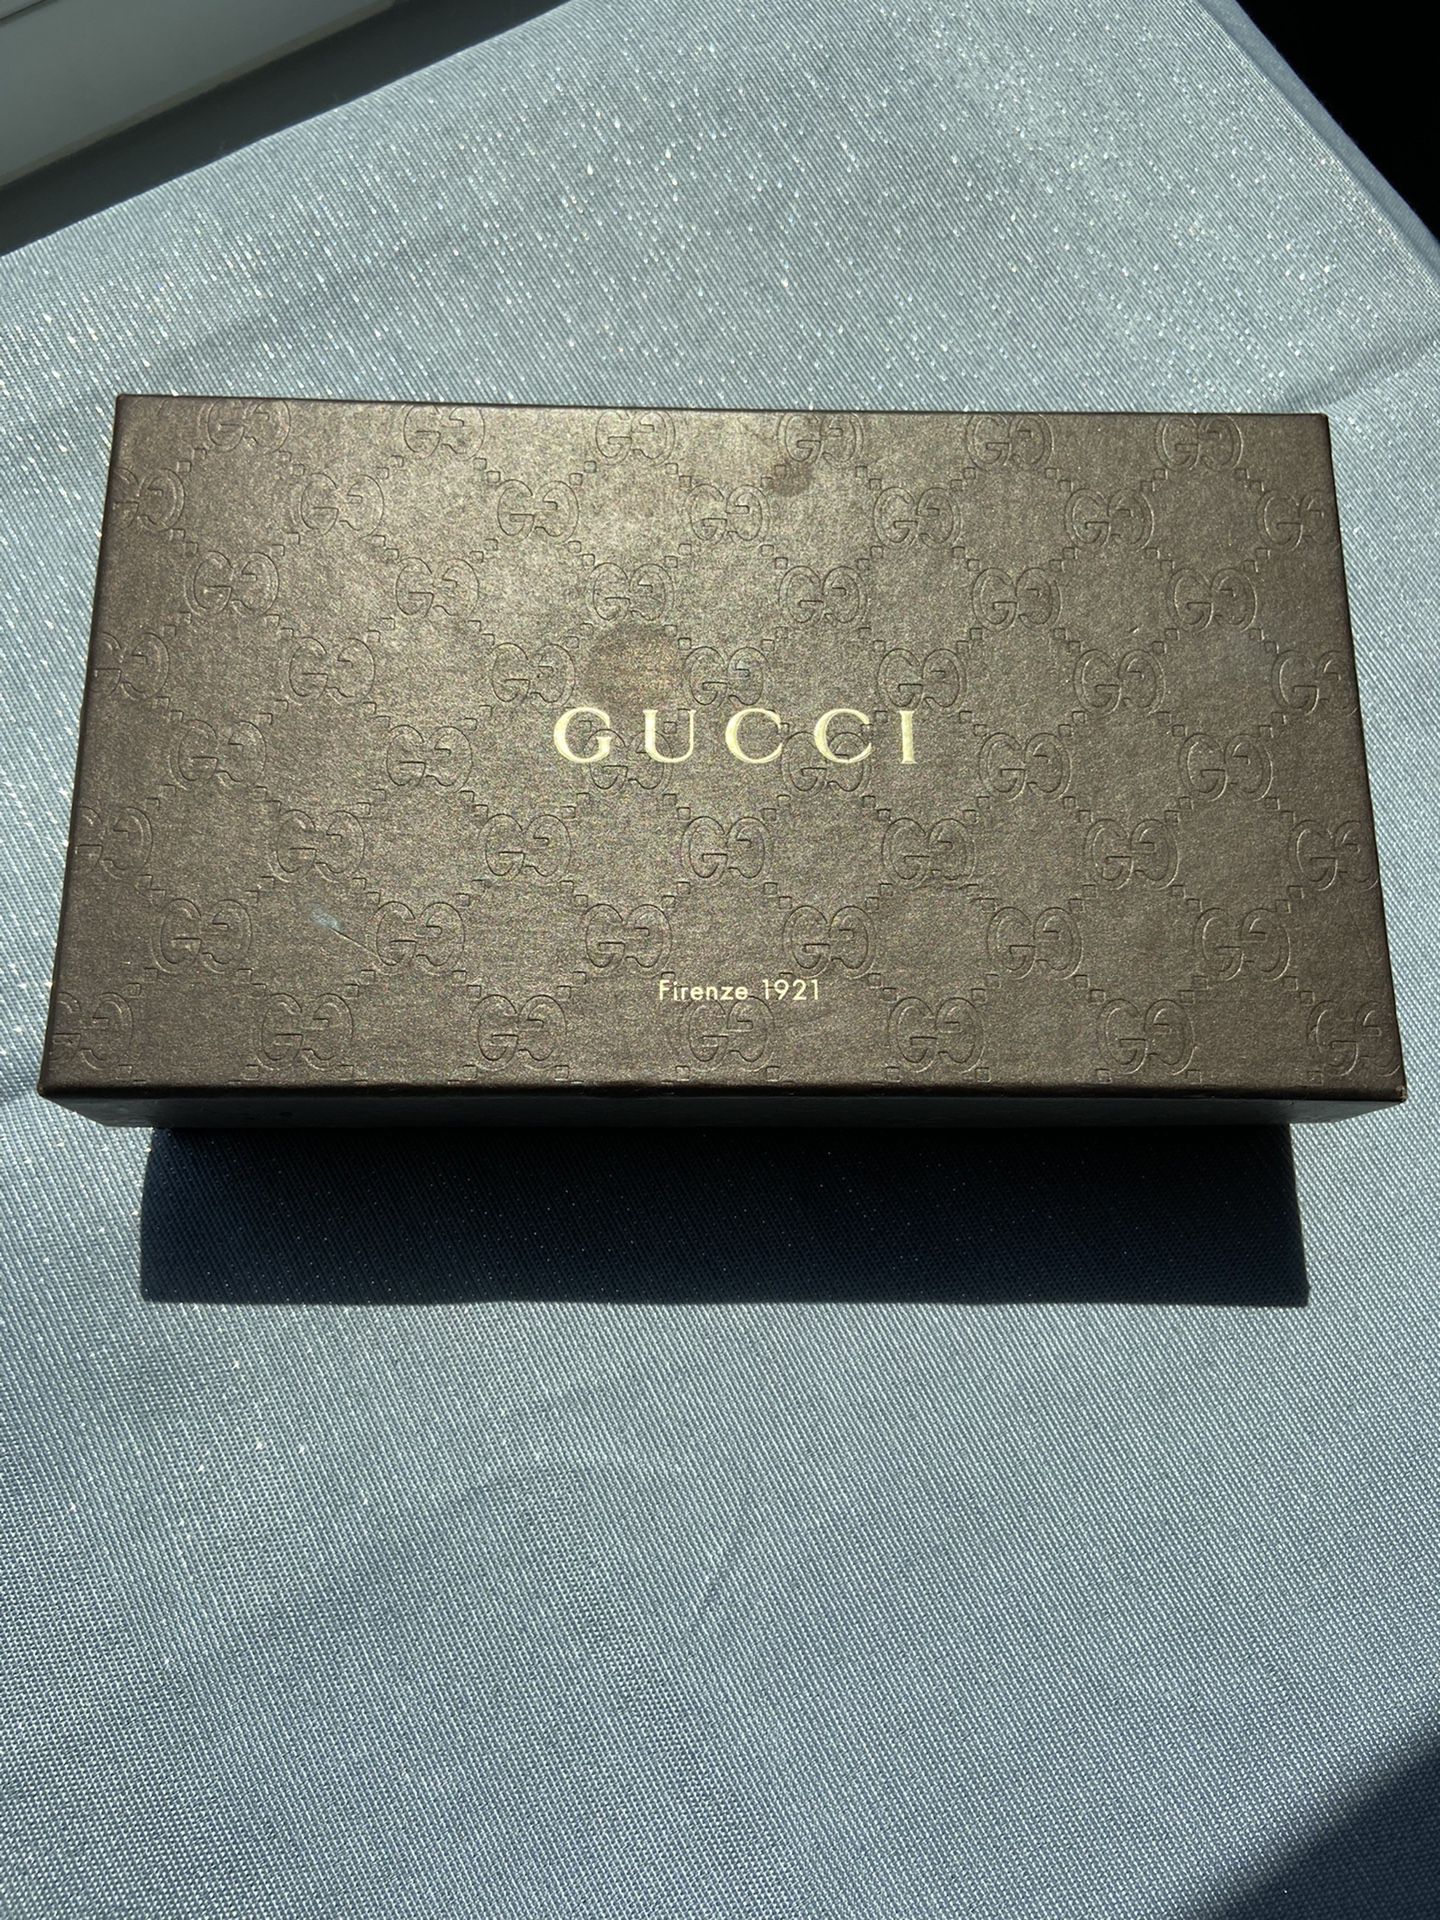 Authentic Gucci wallet/optional wristlet w chain.